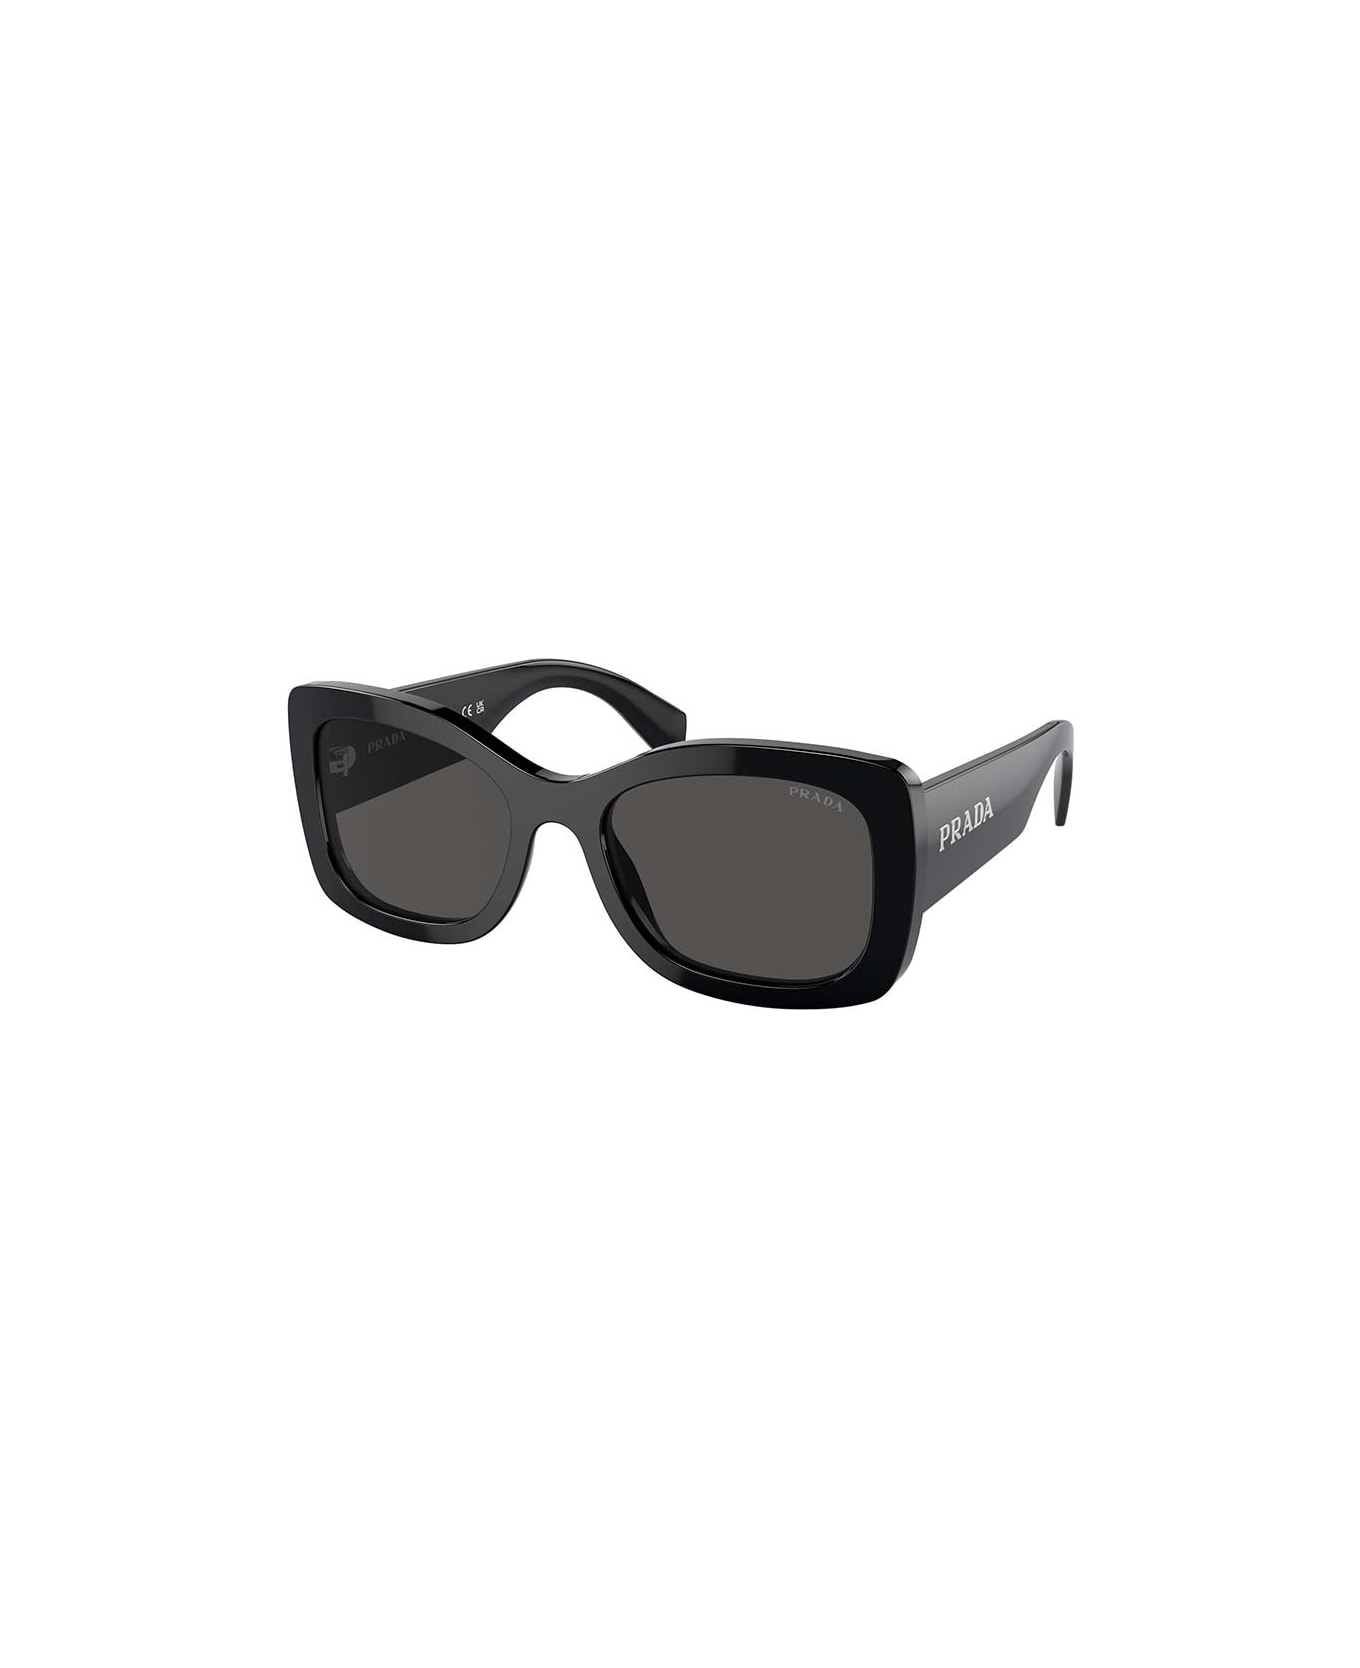 Prada Eyewear Sole Sunglasses - 1AB5S0